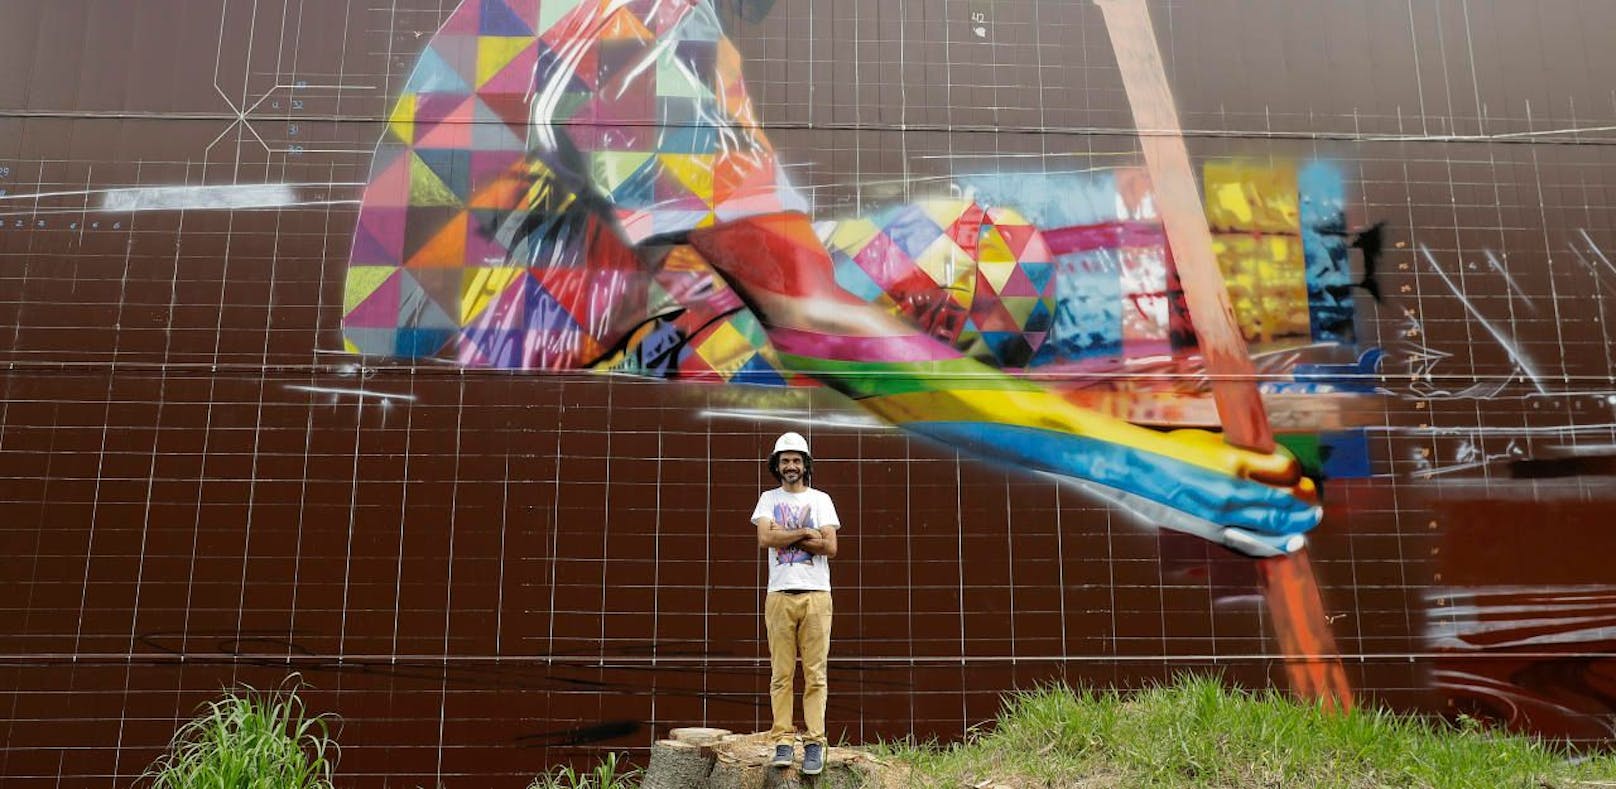 Weltgrößtes Graffito ziert Fassade von Schoko-Fabrik